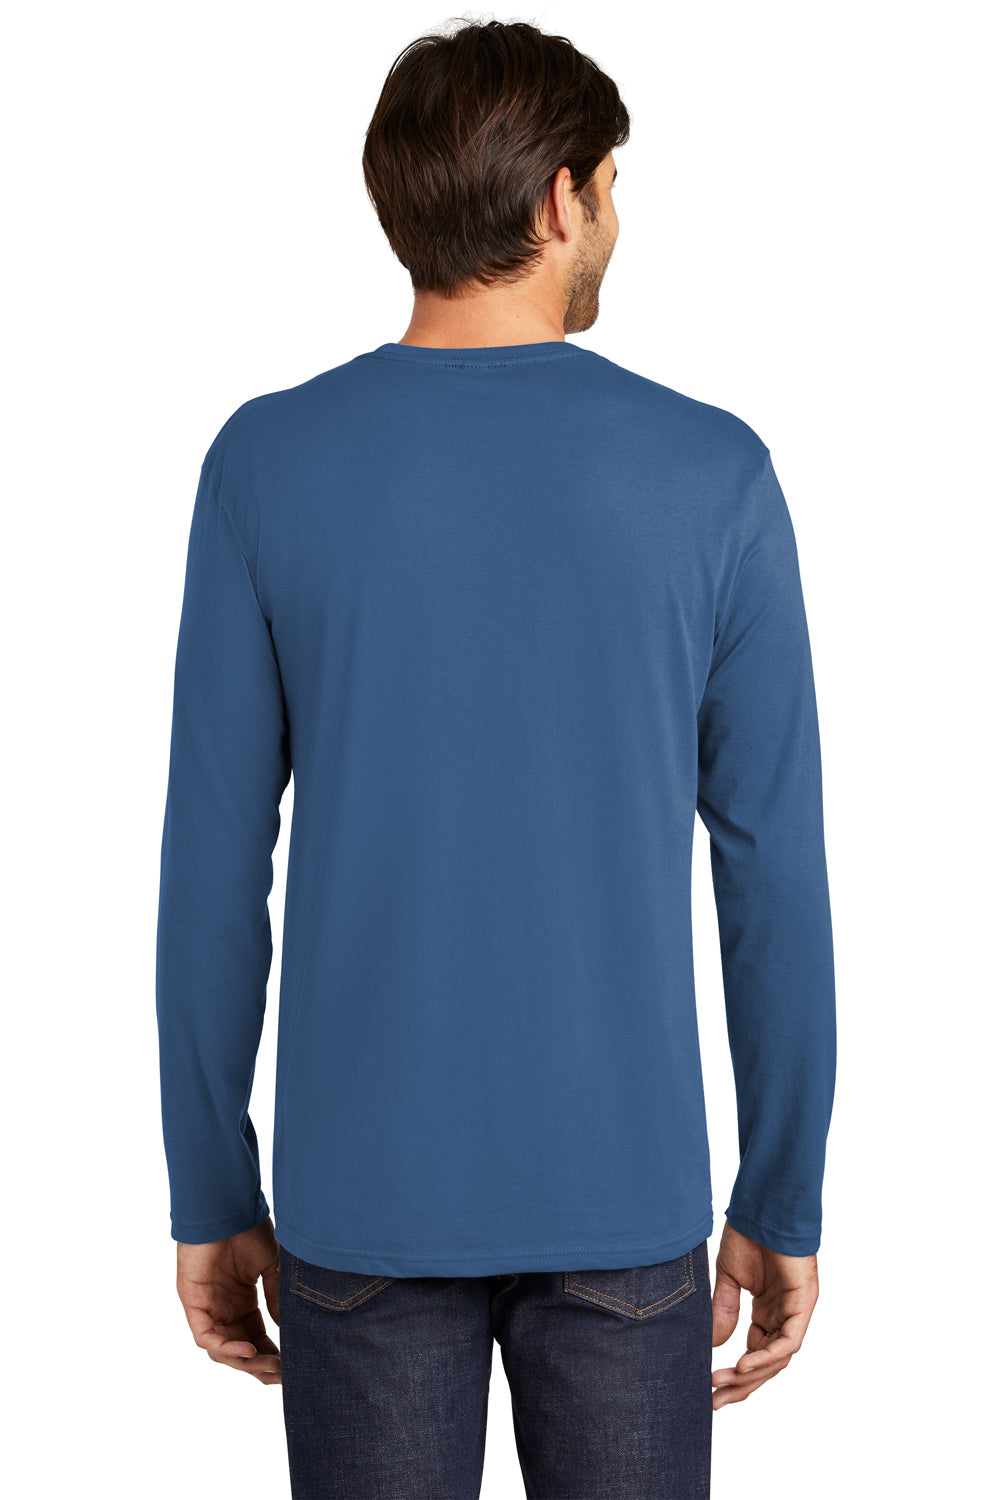 District DT105 Mens Perfect Weight Long Sleeve Crewneck T-Shirt Maritime Blue Back